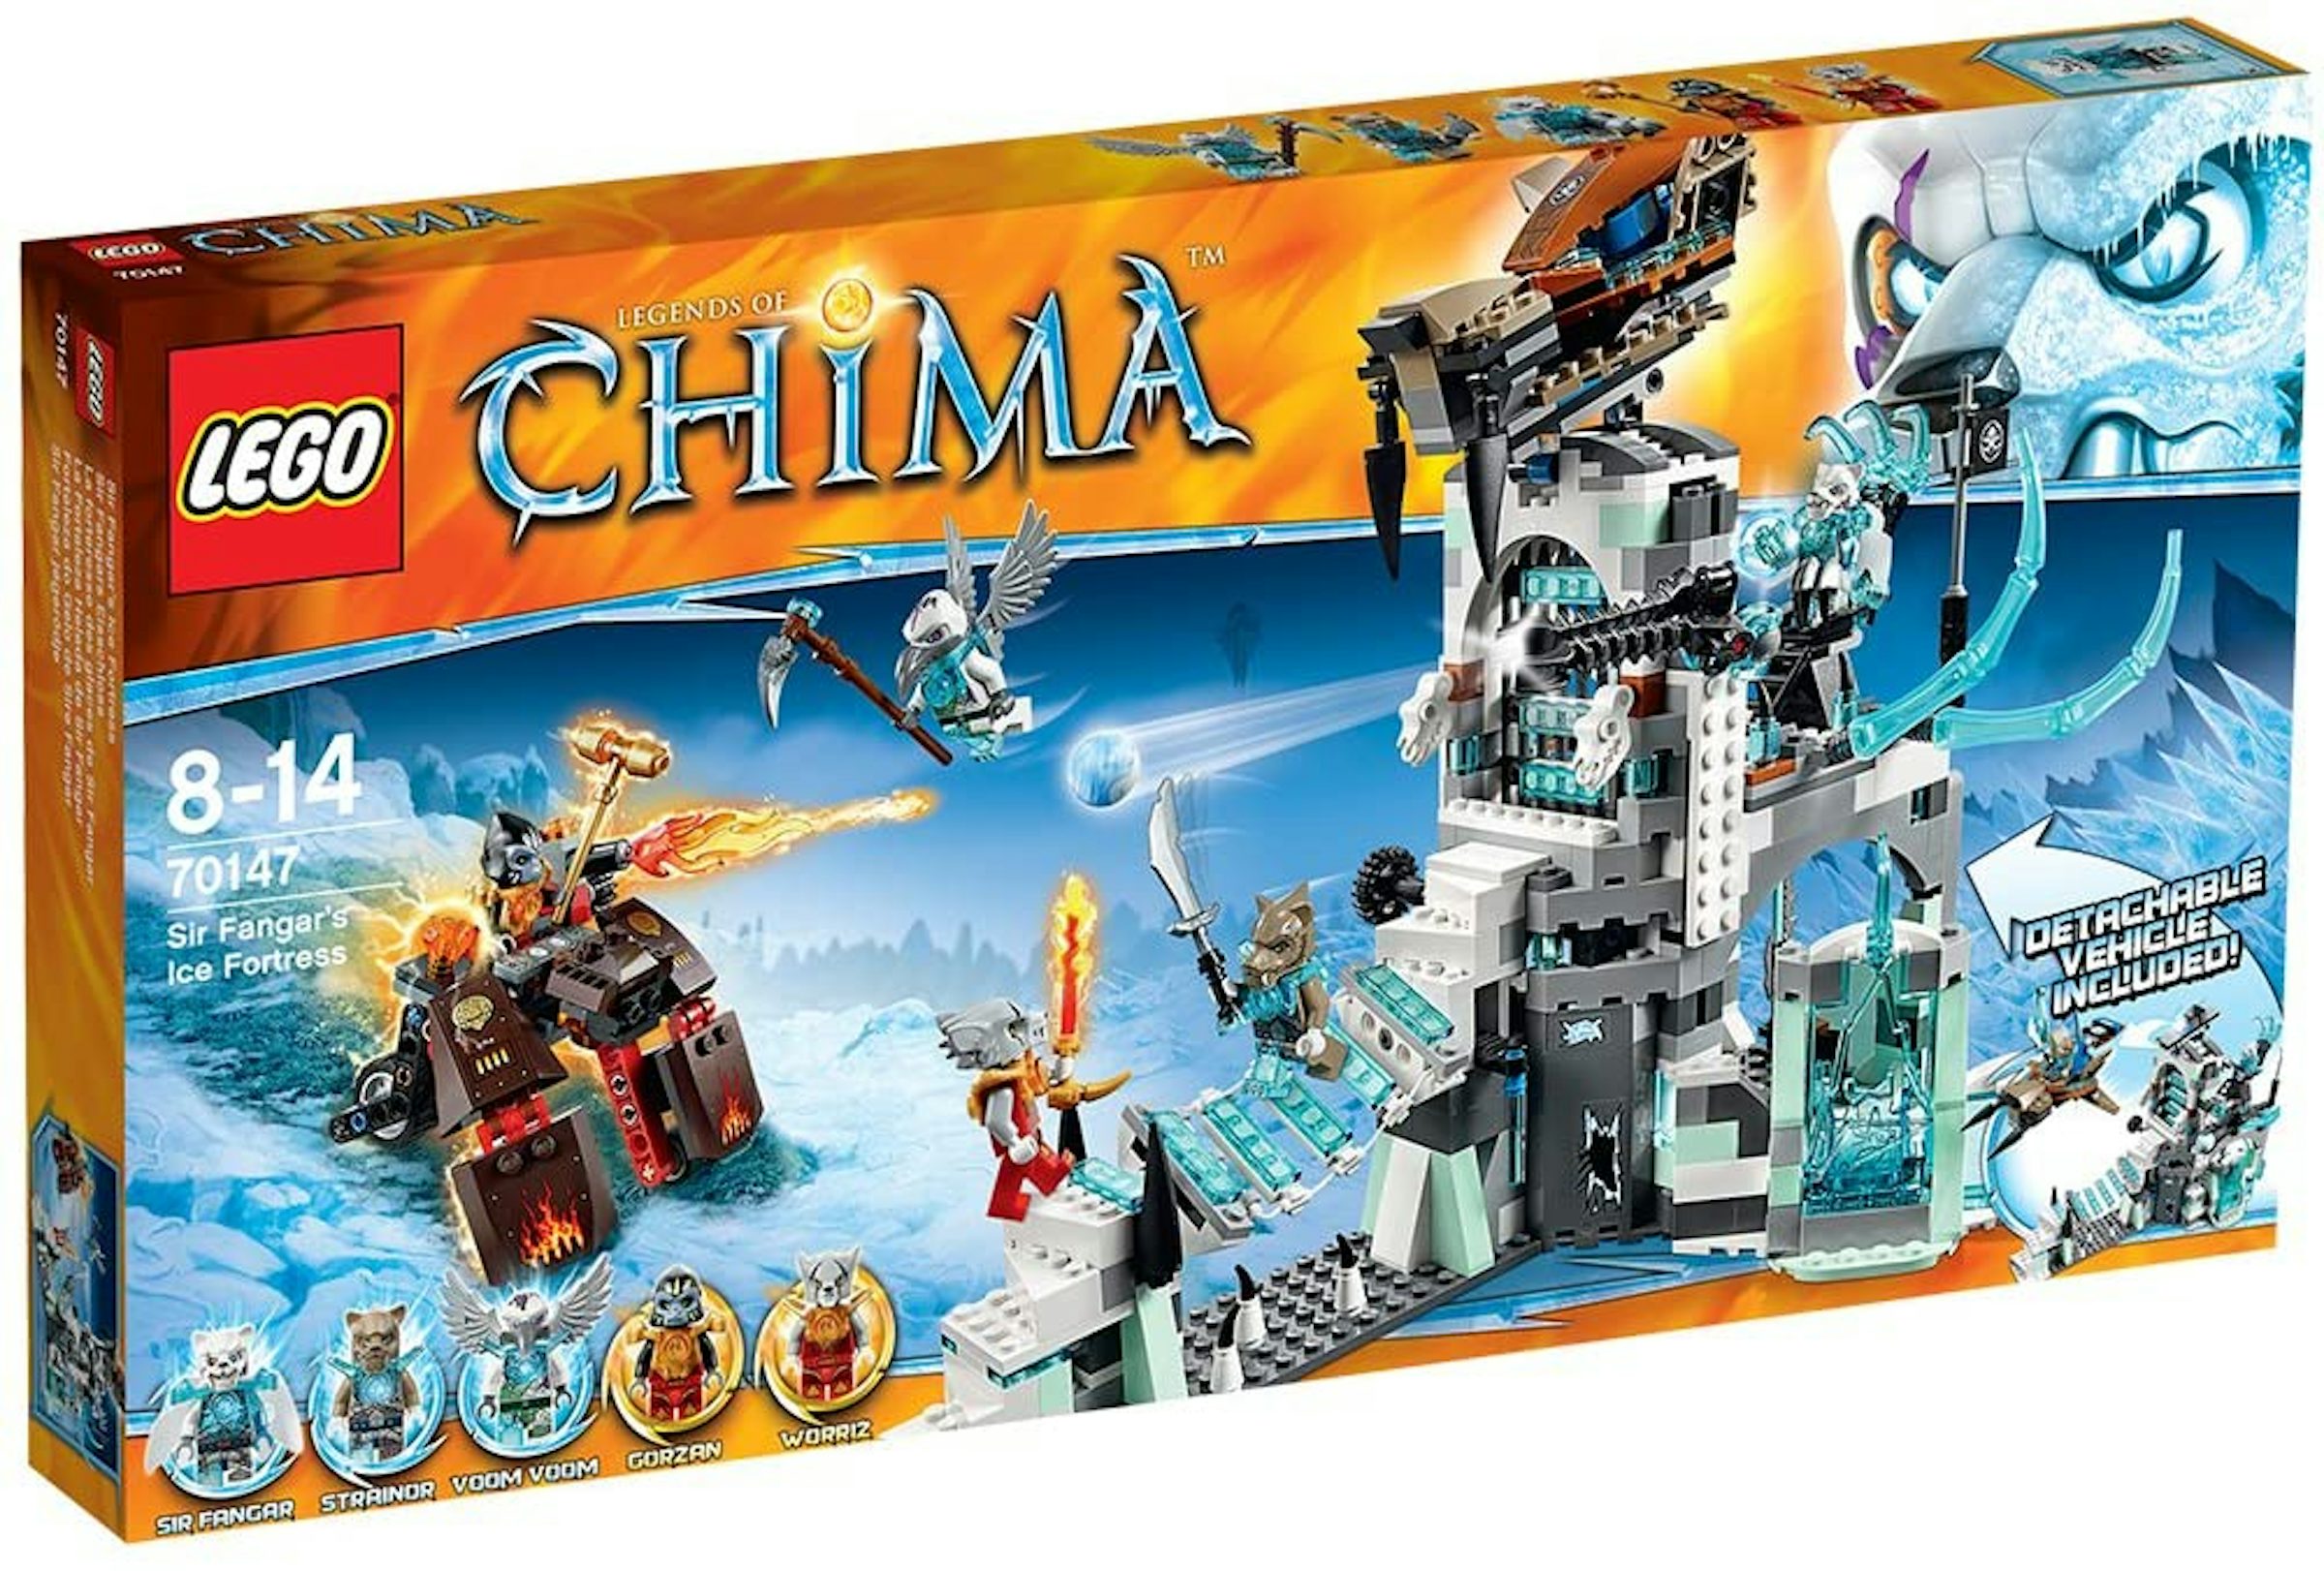 Lego Legends of Chima - Wikipedia